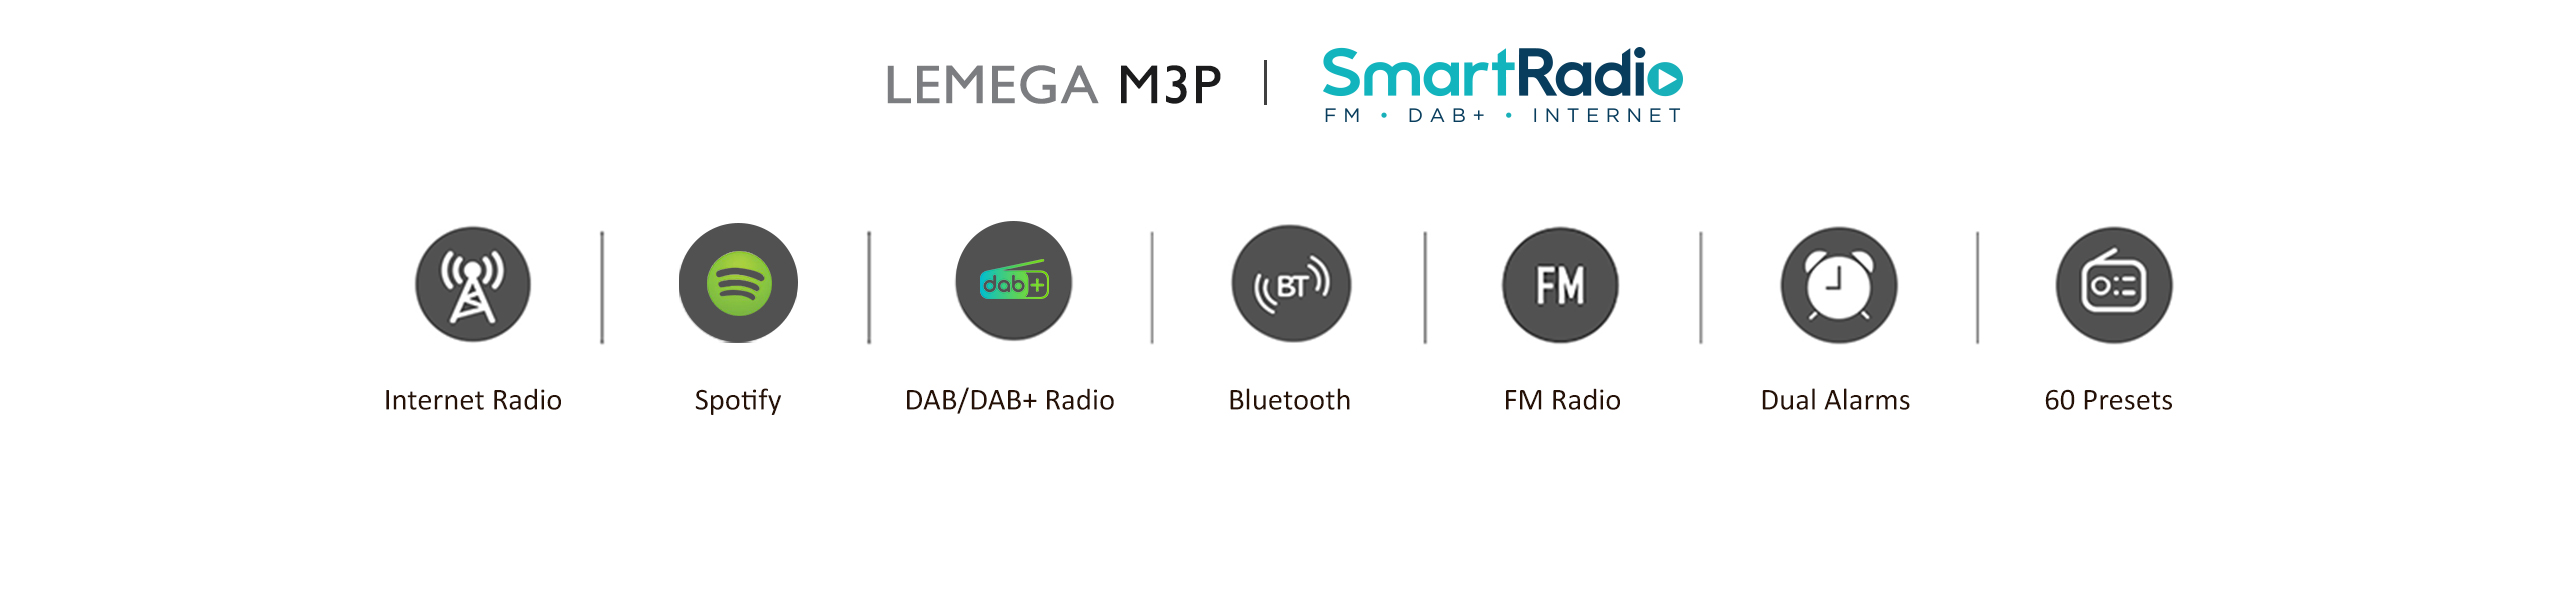  LEMEGA M3+ WiFi Smart Radio,Internet Radio,FM Digital